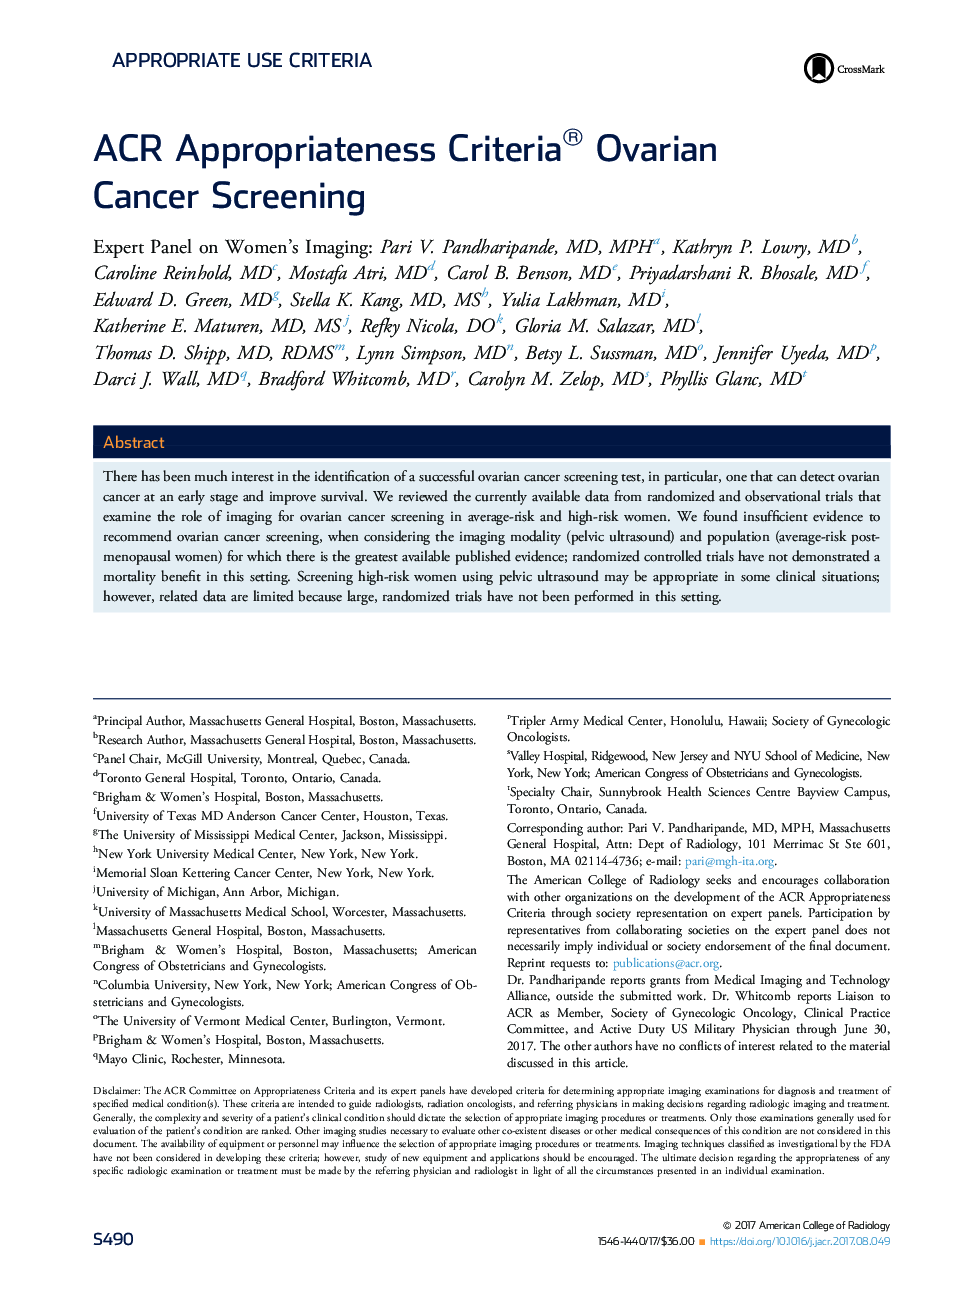 ACR Appropriateness Criteria® Ovarian CancerÂ Screening